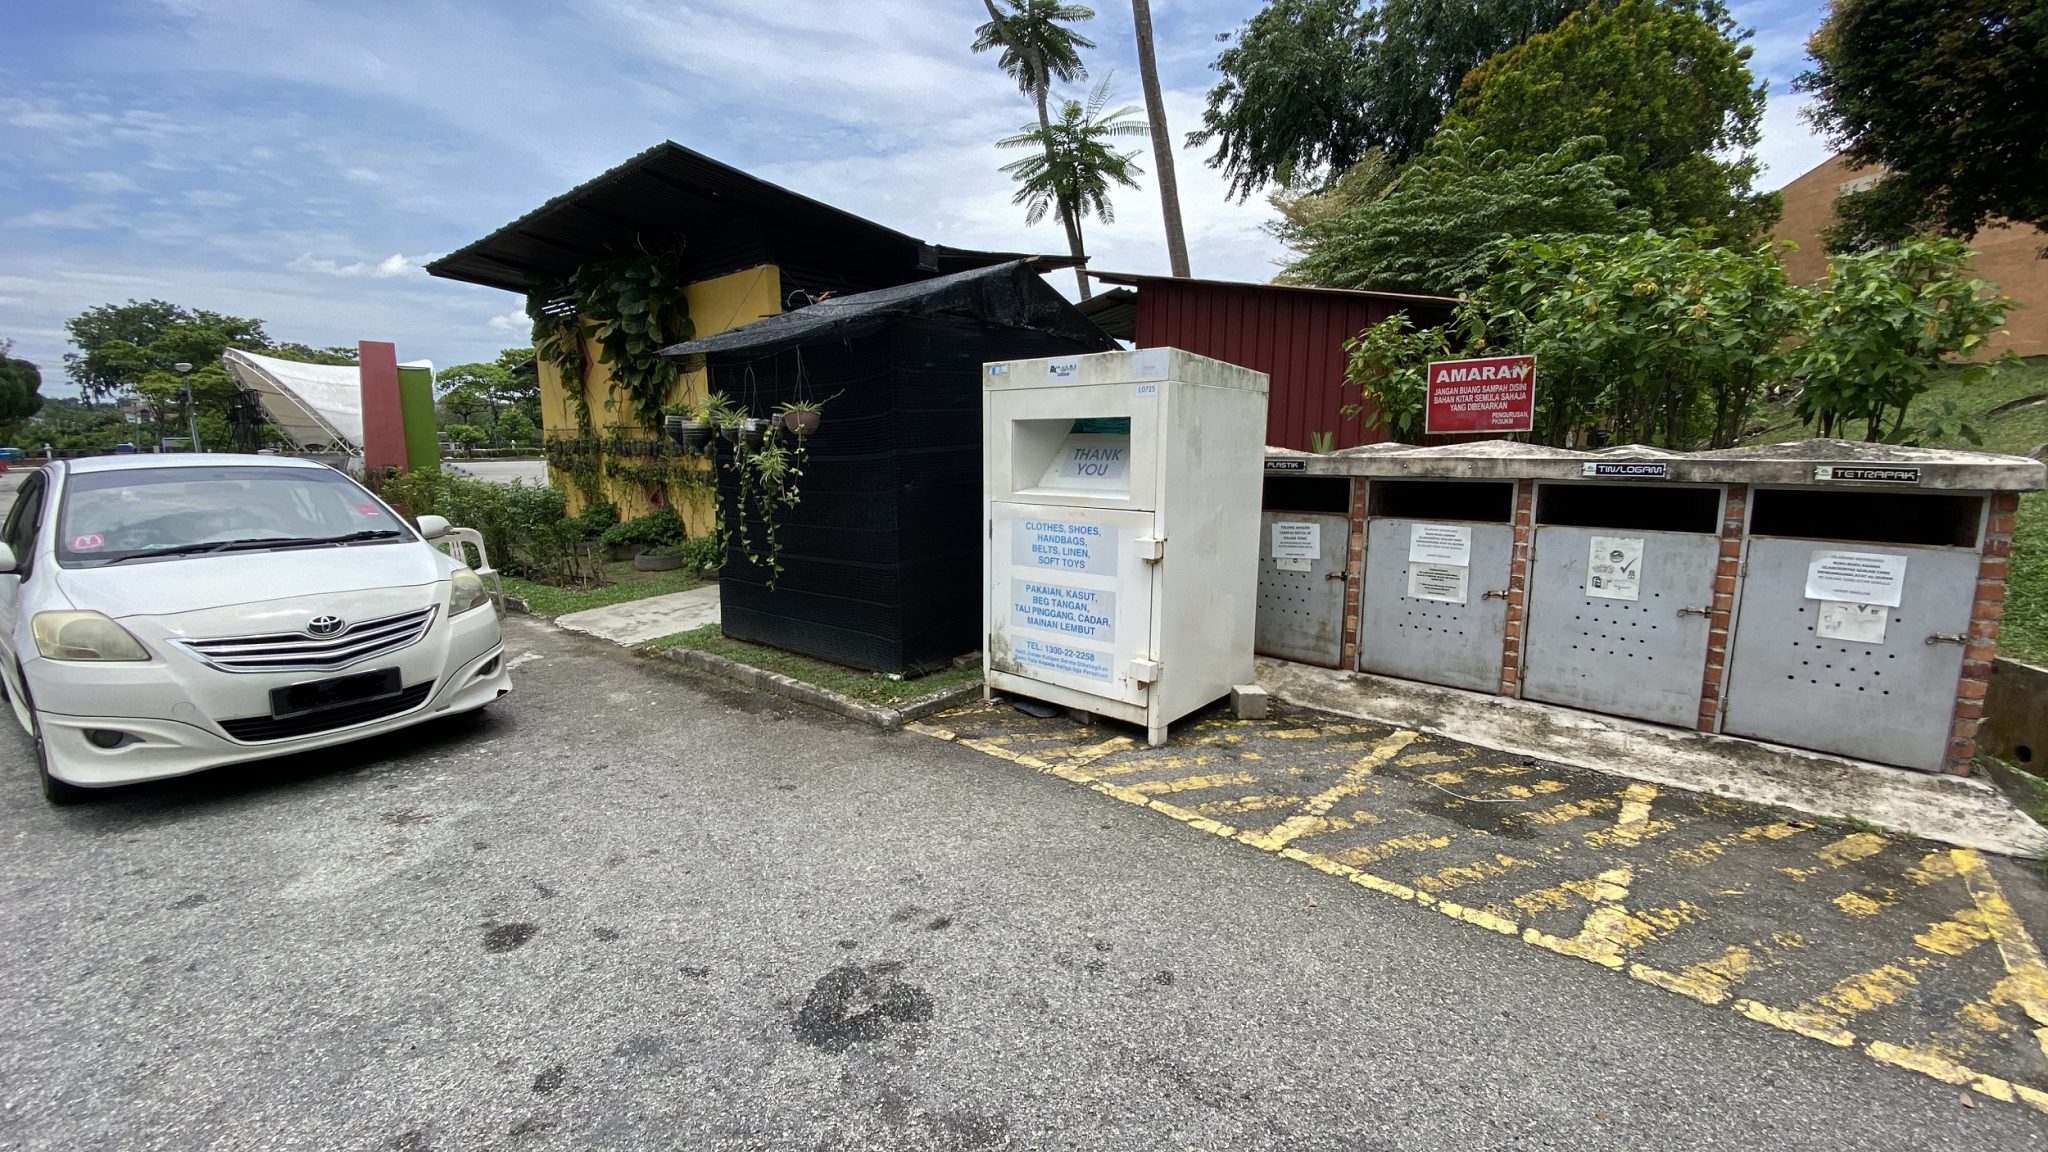 Pusat Pengumpulan Baju Terpakai - Tempat Recycle Baju Lama Di Shah Alam